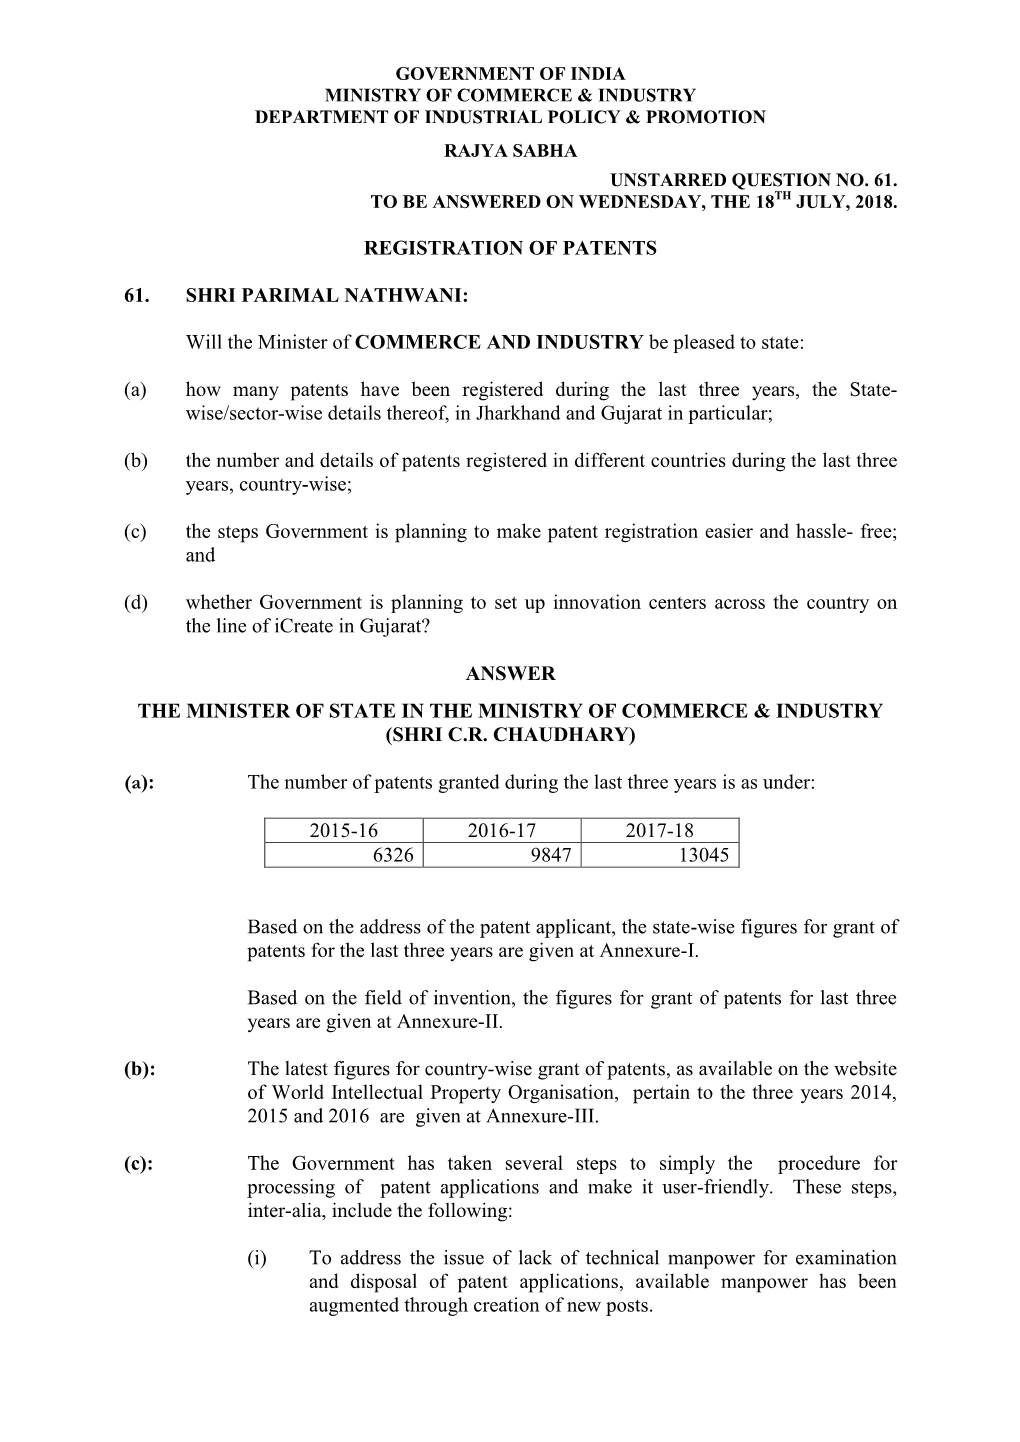 Registration of Patents 61. Shri Parimal Nathwani